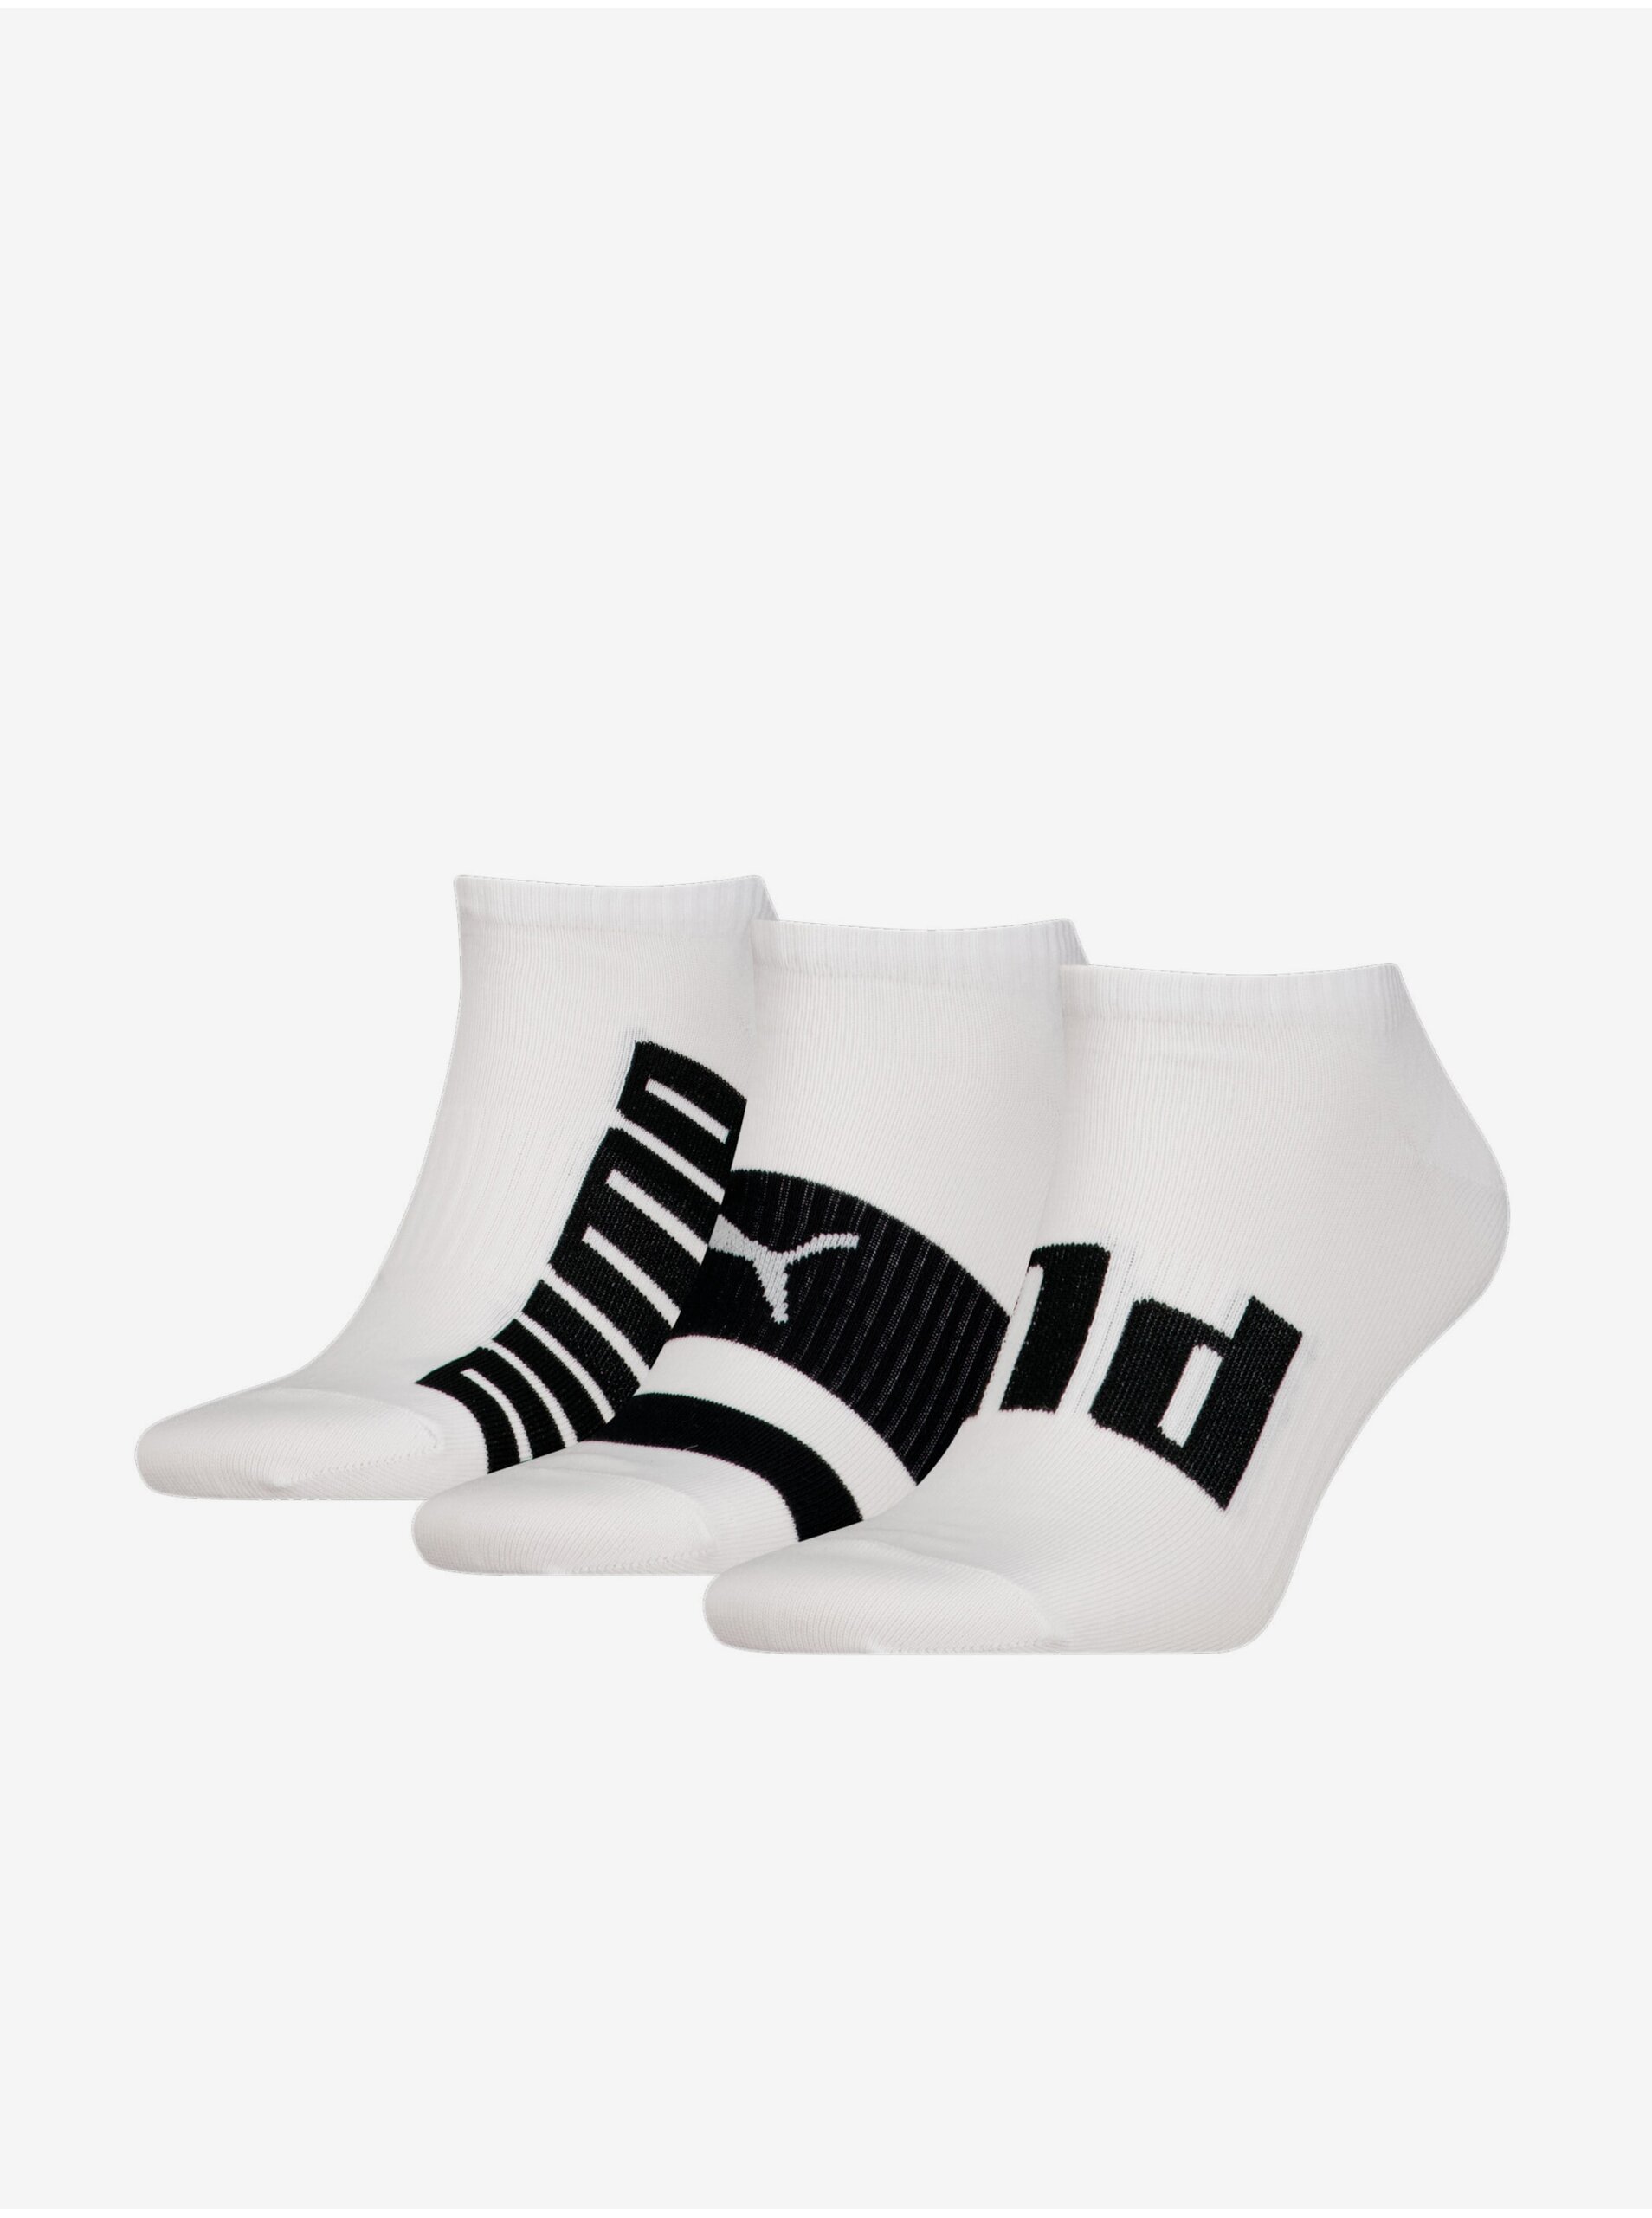 Set of three pairs of Puma socks - Men's